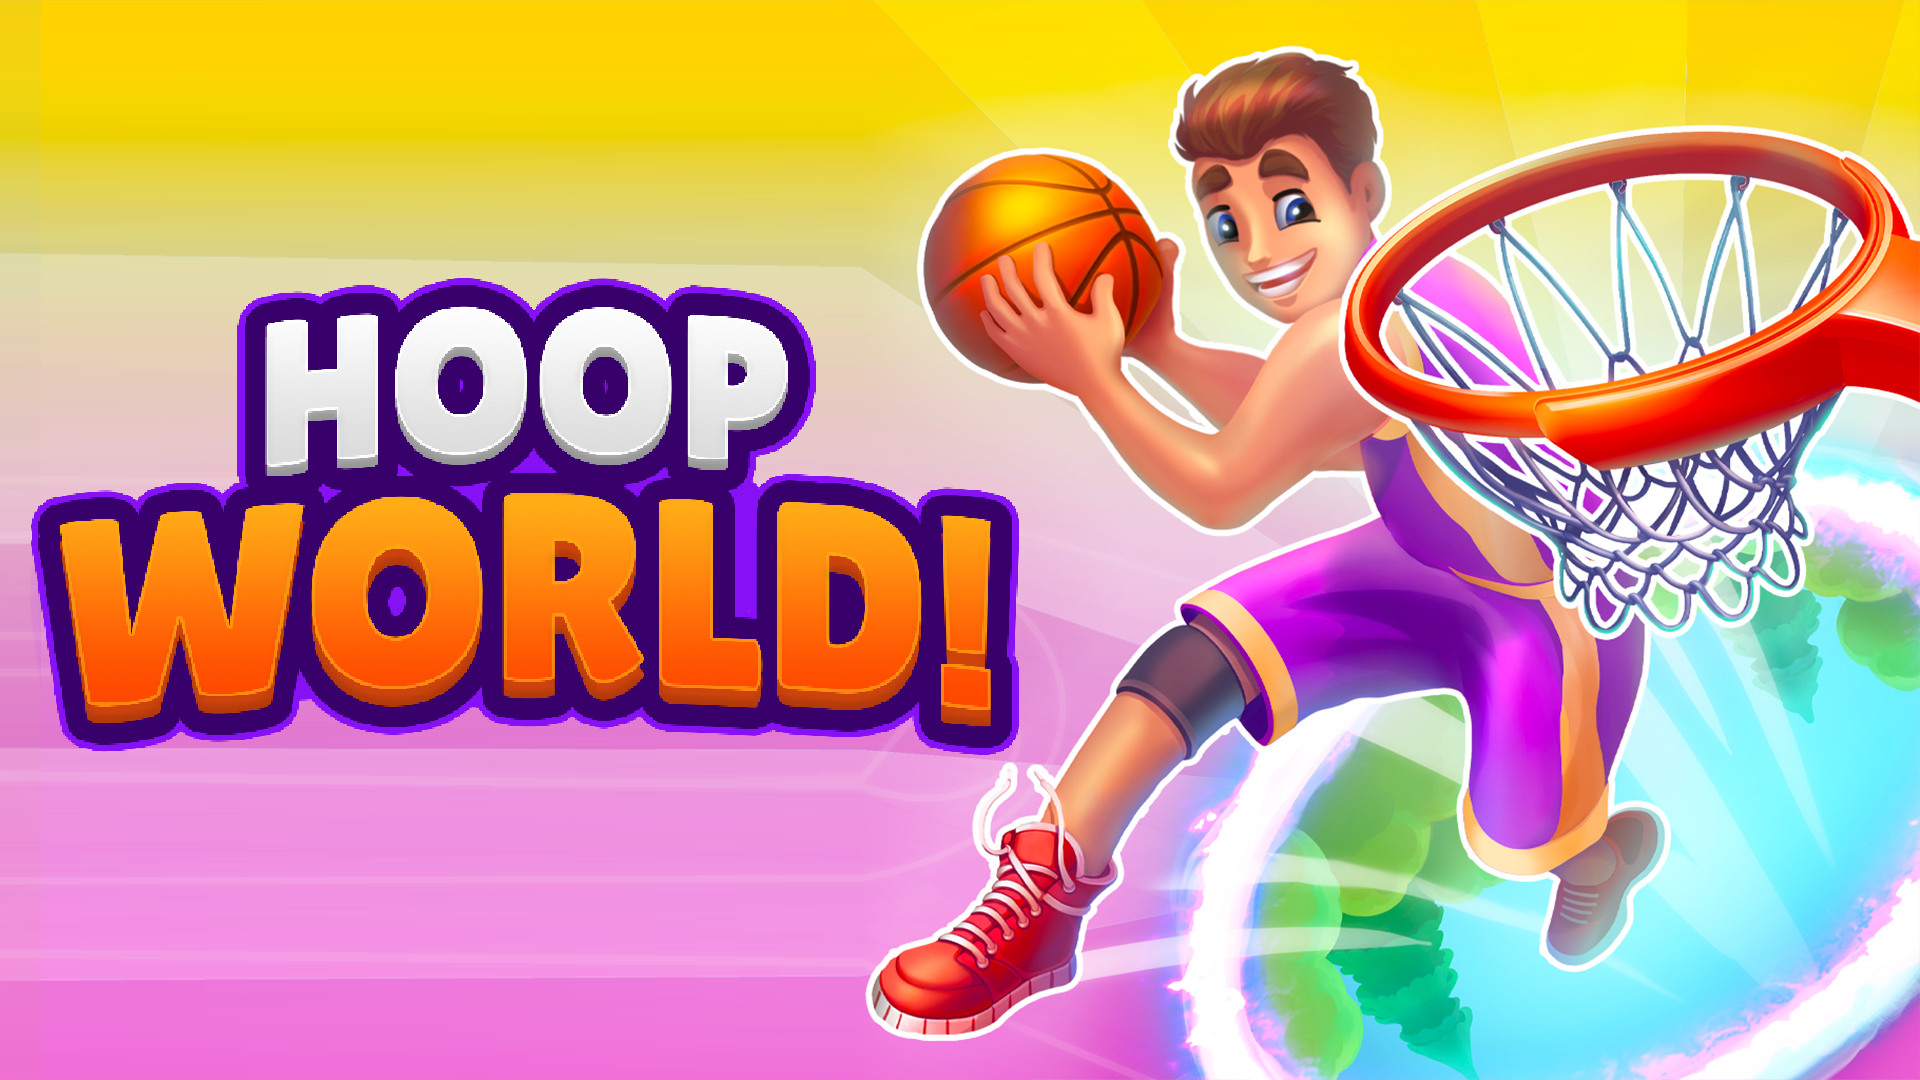 Hoop World 3D Game Image